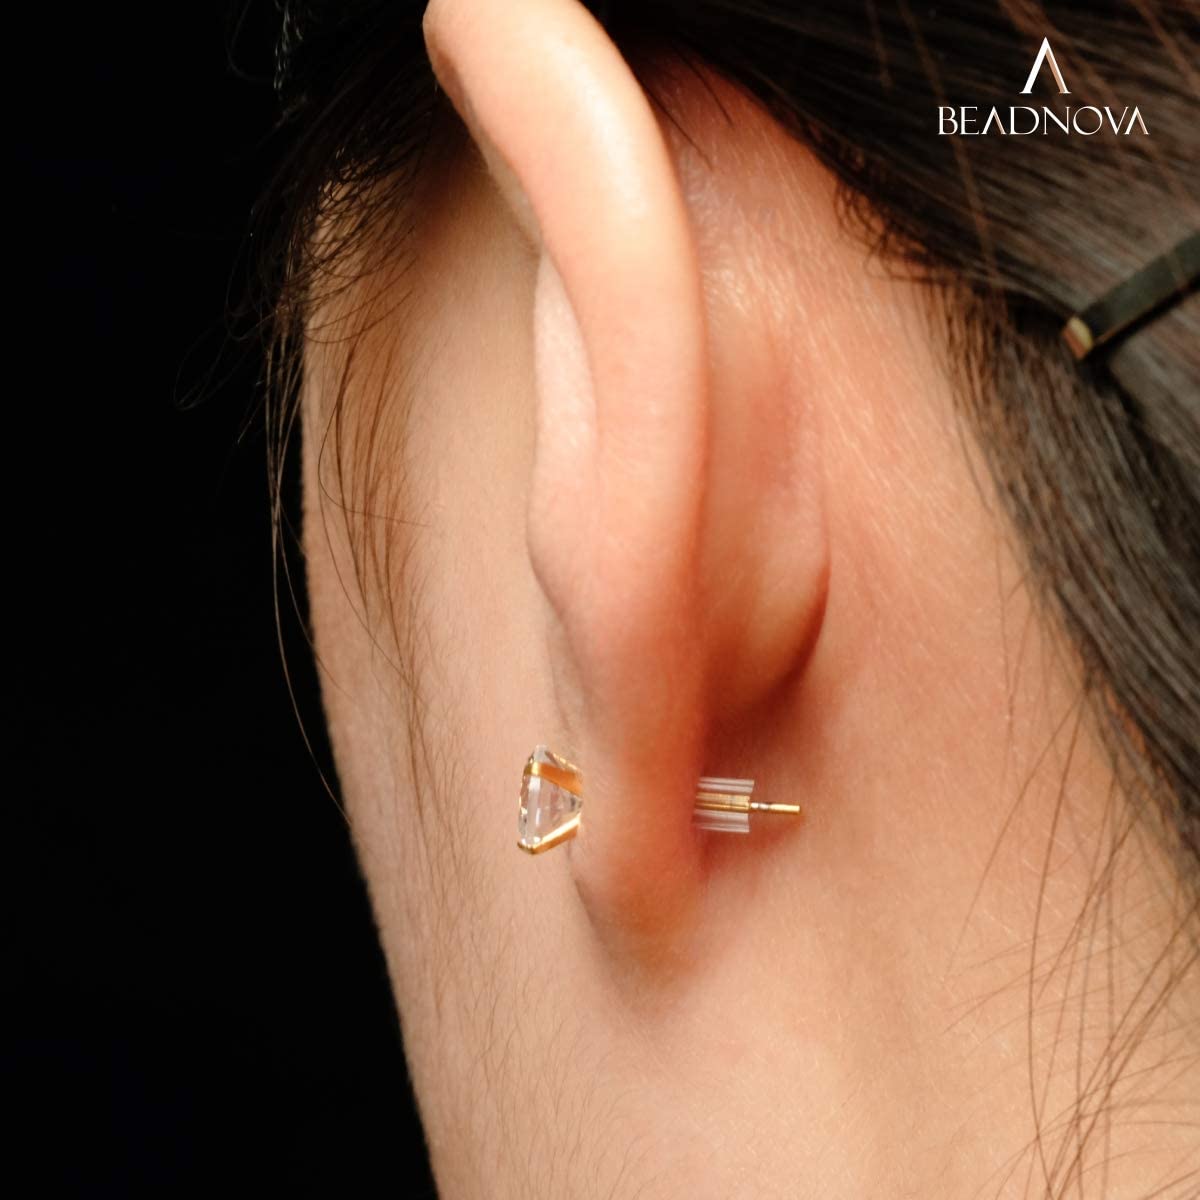 https://www.beadnova.com/wp-content/uploads/2021/01/BEADNOVA-Clear-Plastic-Earring-Backs-Rubber-Earring-Backings-Replacement-1000pcs-6.jpg